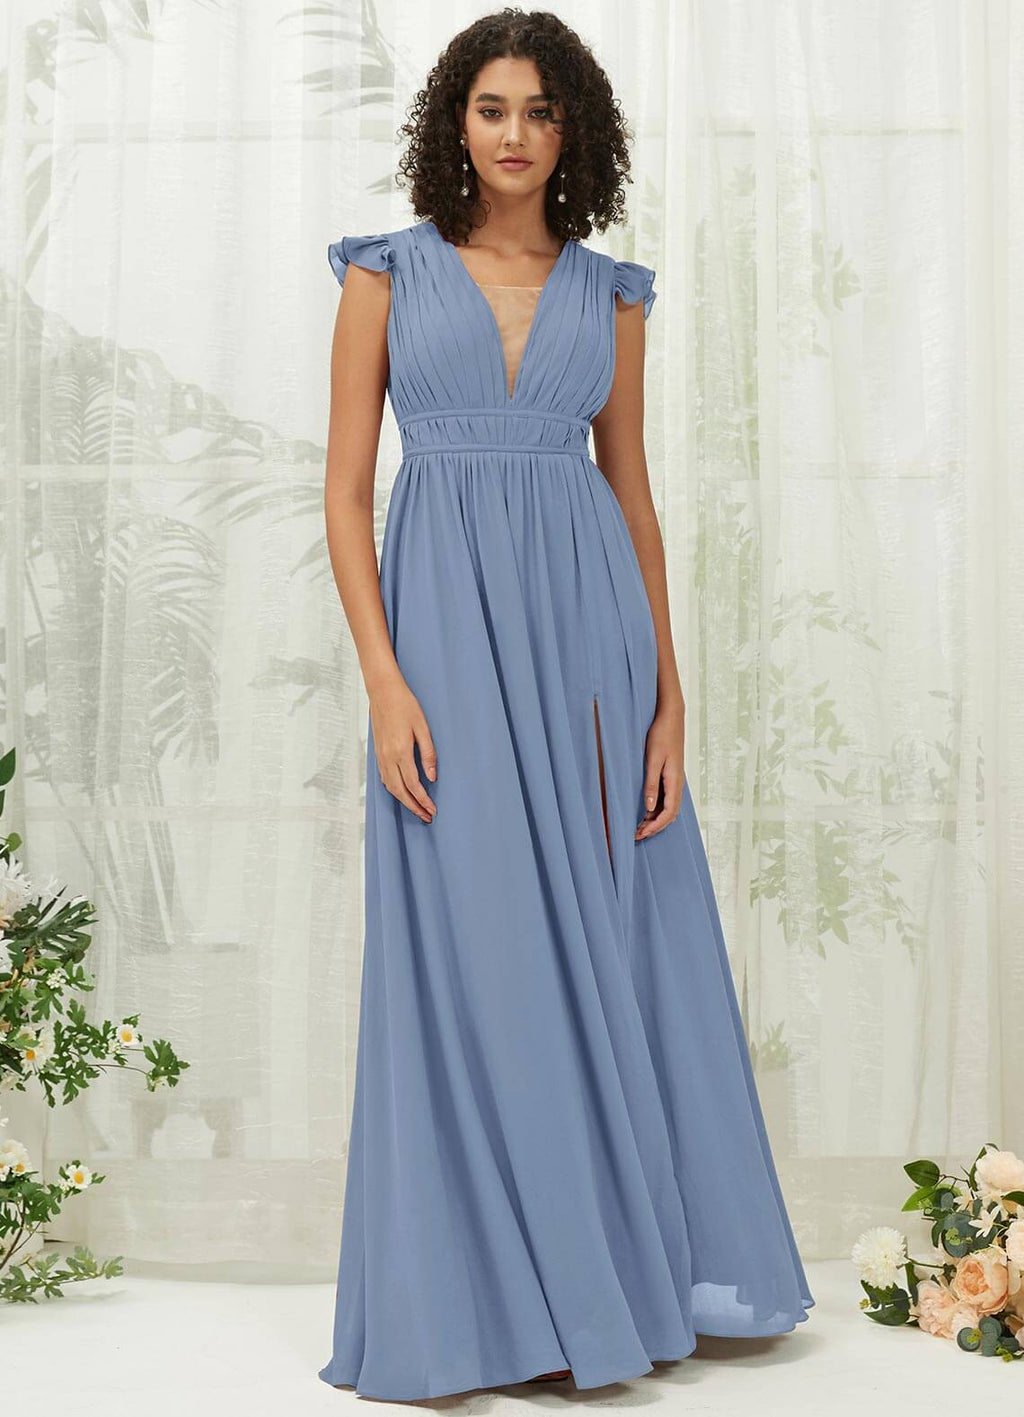 NZ Bridal Slate Blue Cap Sleeves Chiffon Bridesmaid Dress R0410 Collins a